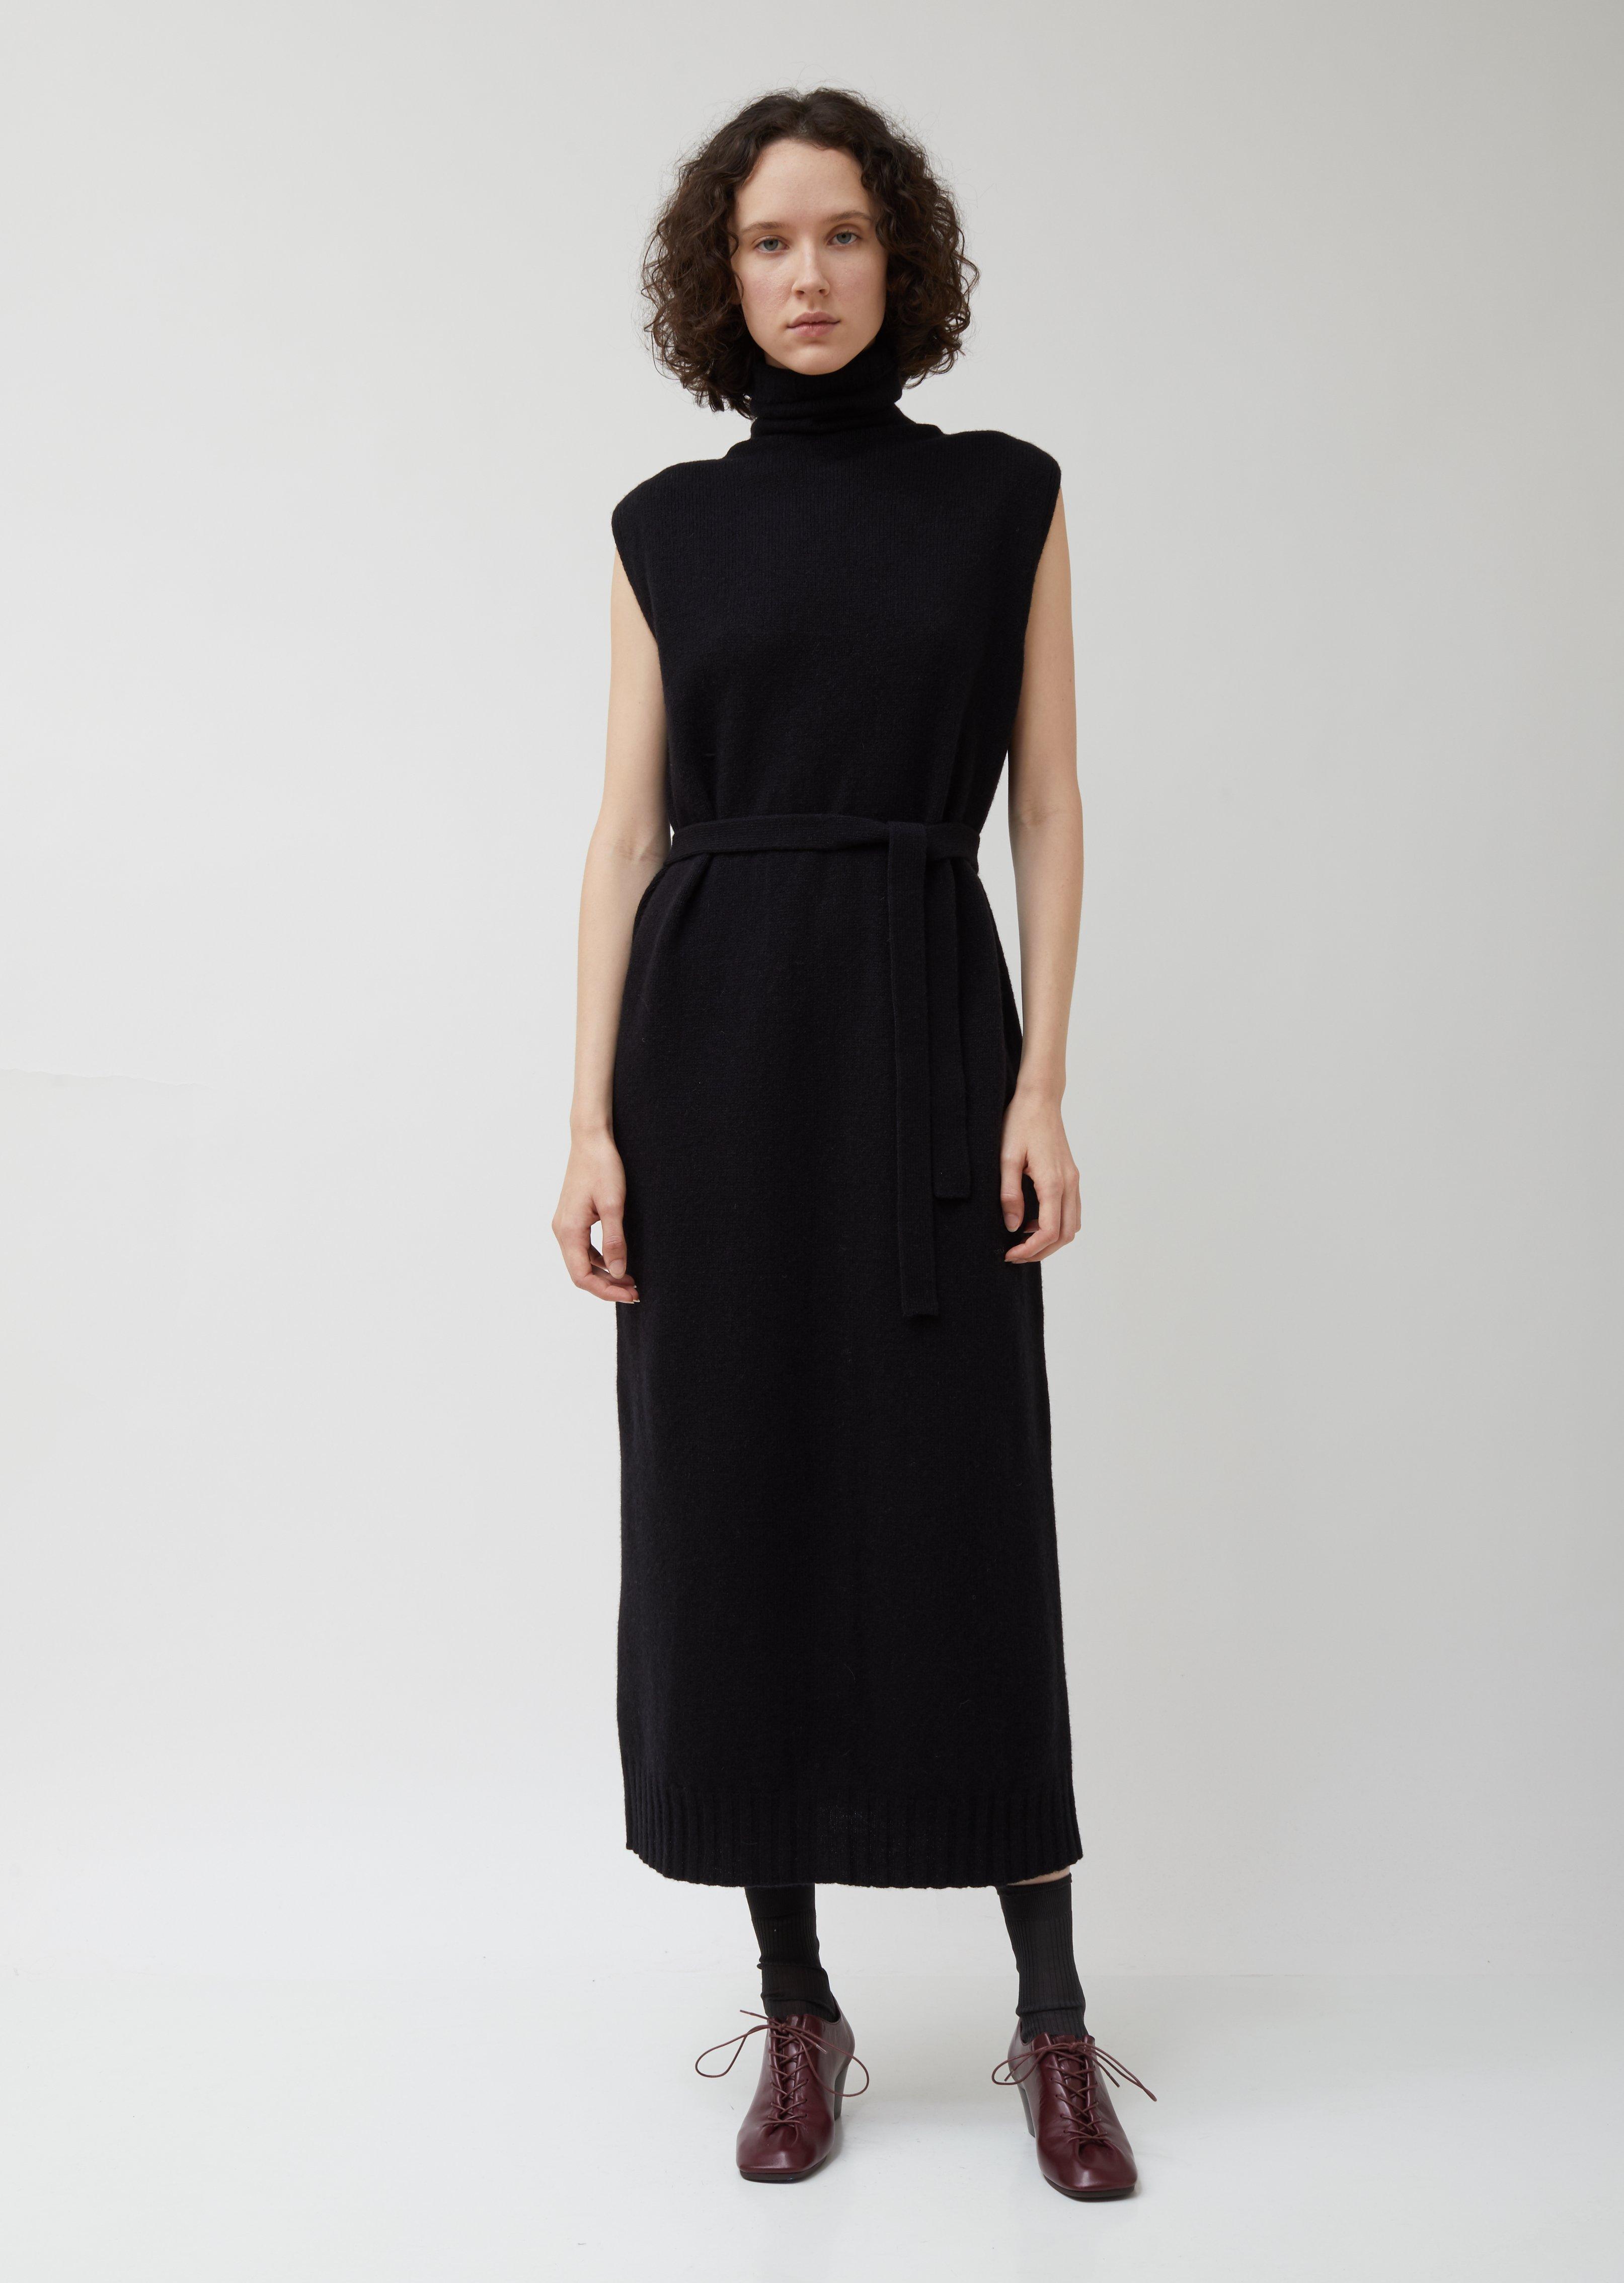 Lemaire Black Wool Tube Dress - Lyst